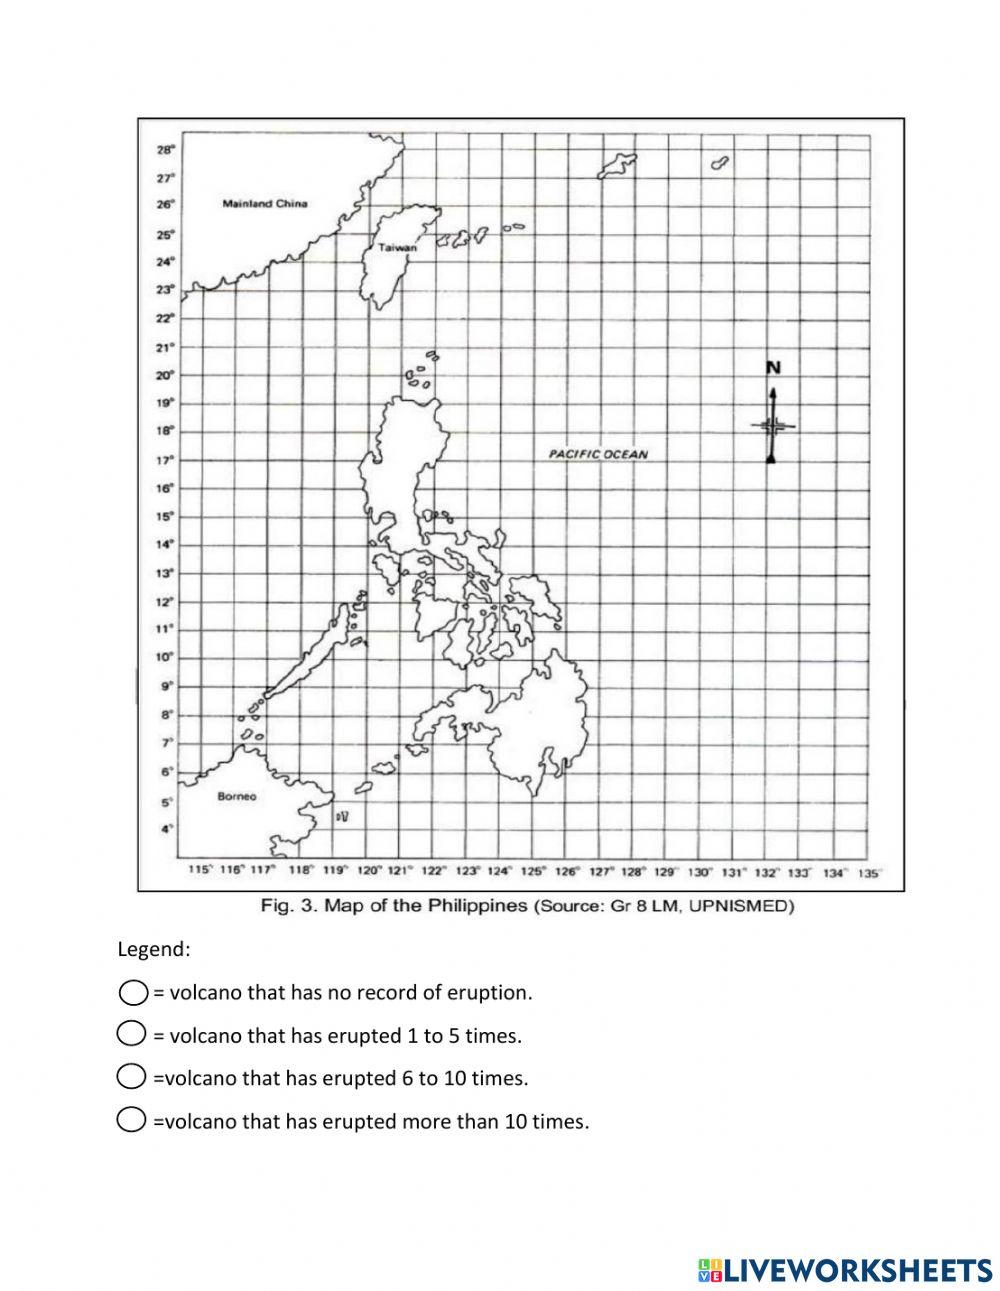 ACTIVITY 1 Volcanoes in the Philippines